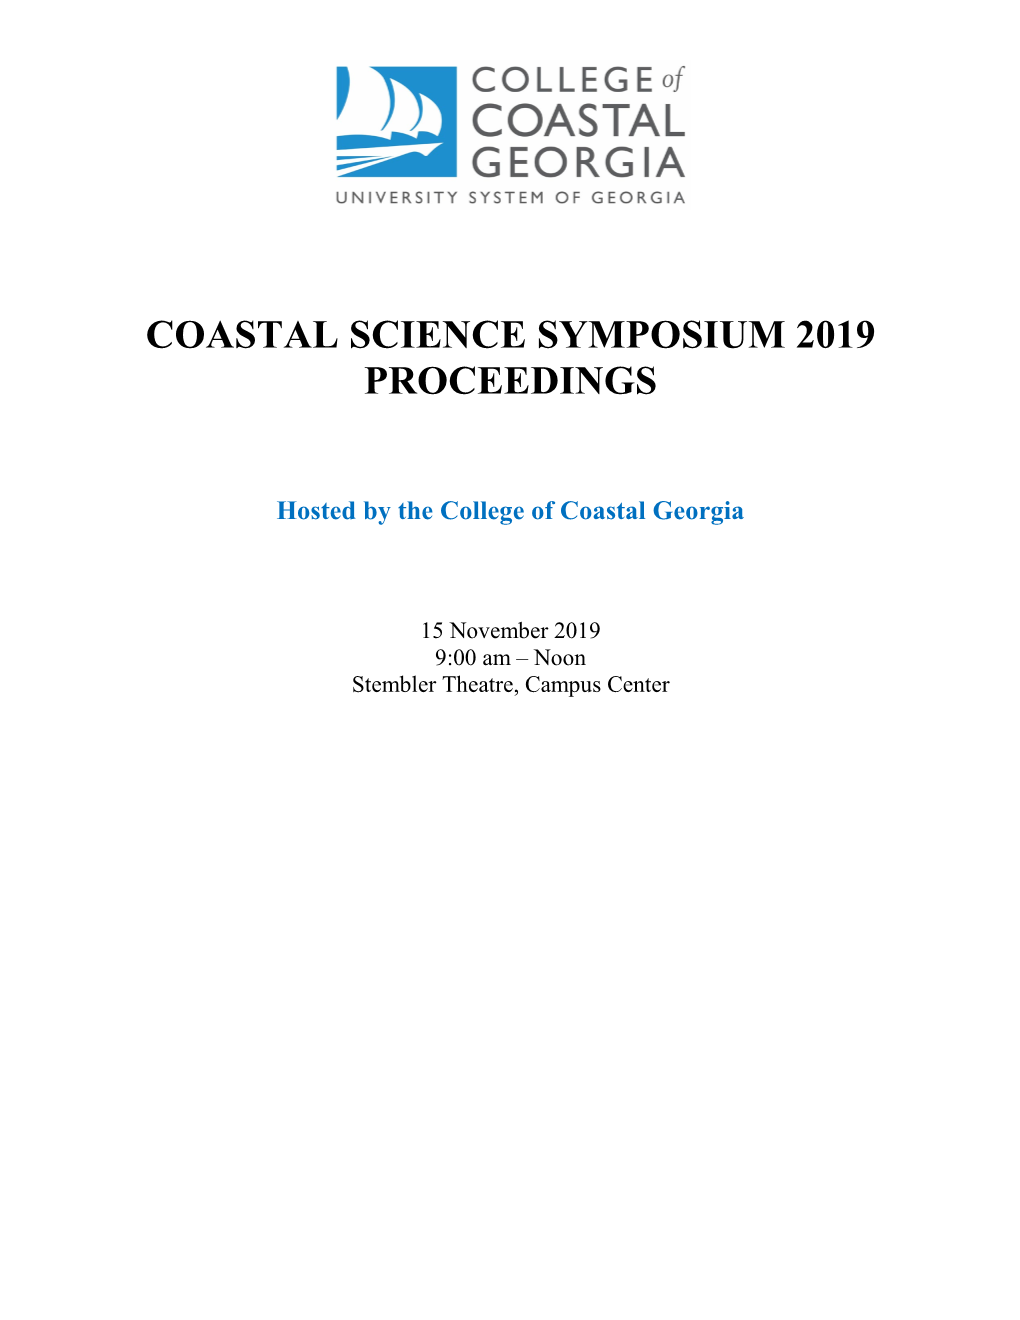 Coastal Science Symposium 2019 Proceedings